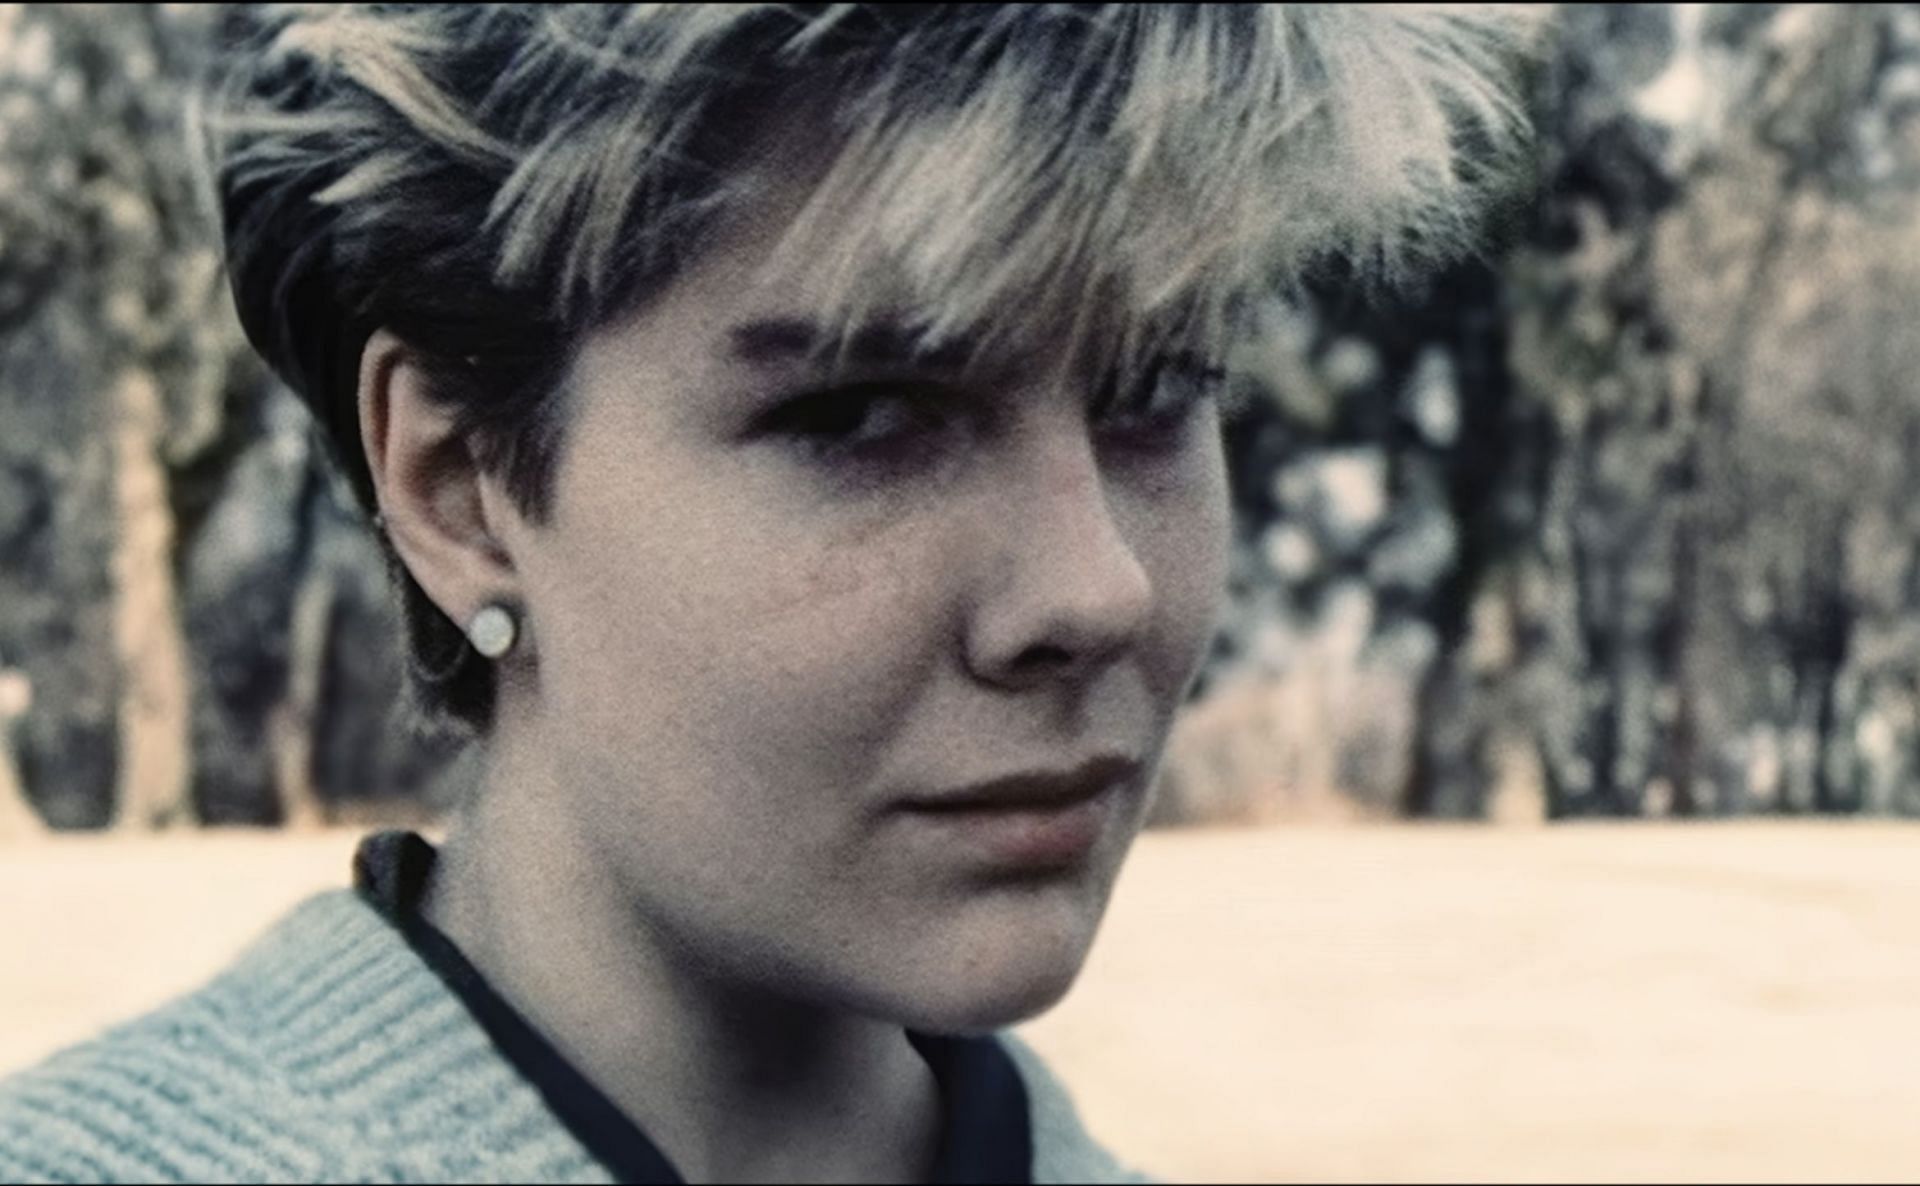 A still of Elizabeth Haysom from the documentary (Image via Netflix)